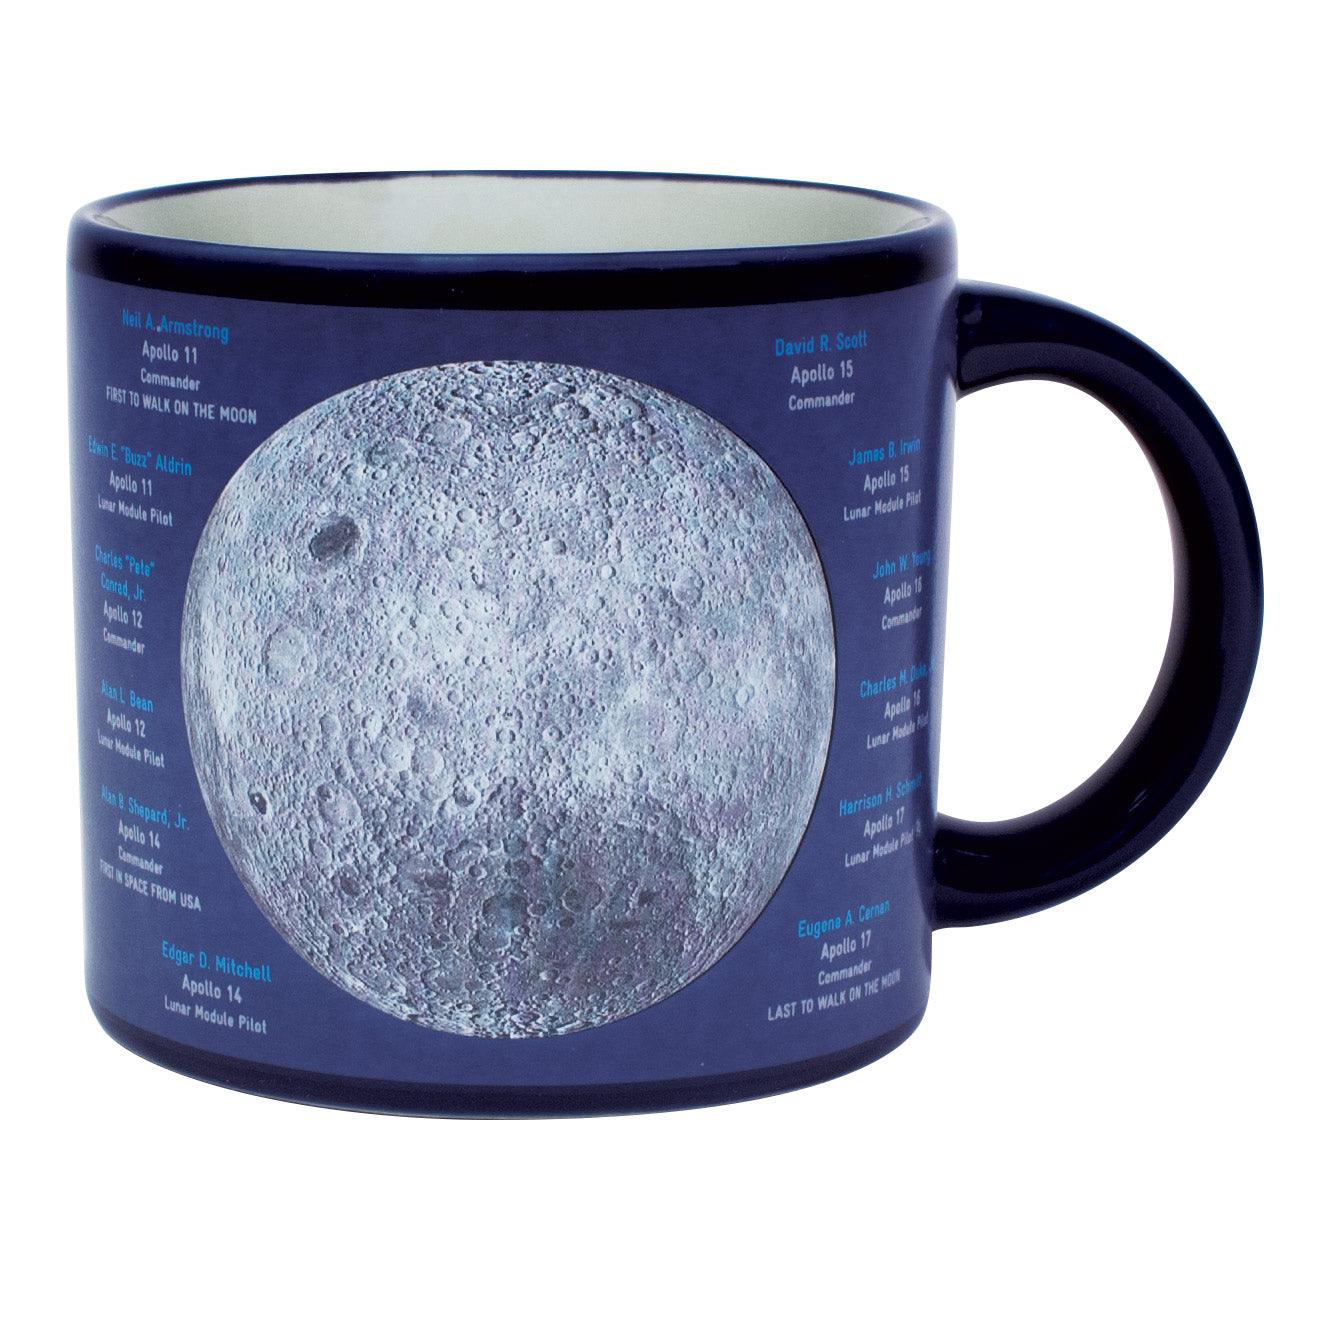 Moon Mug - Color Changing Mug with Astronaut Footprint Inside    